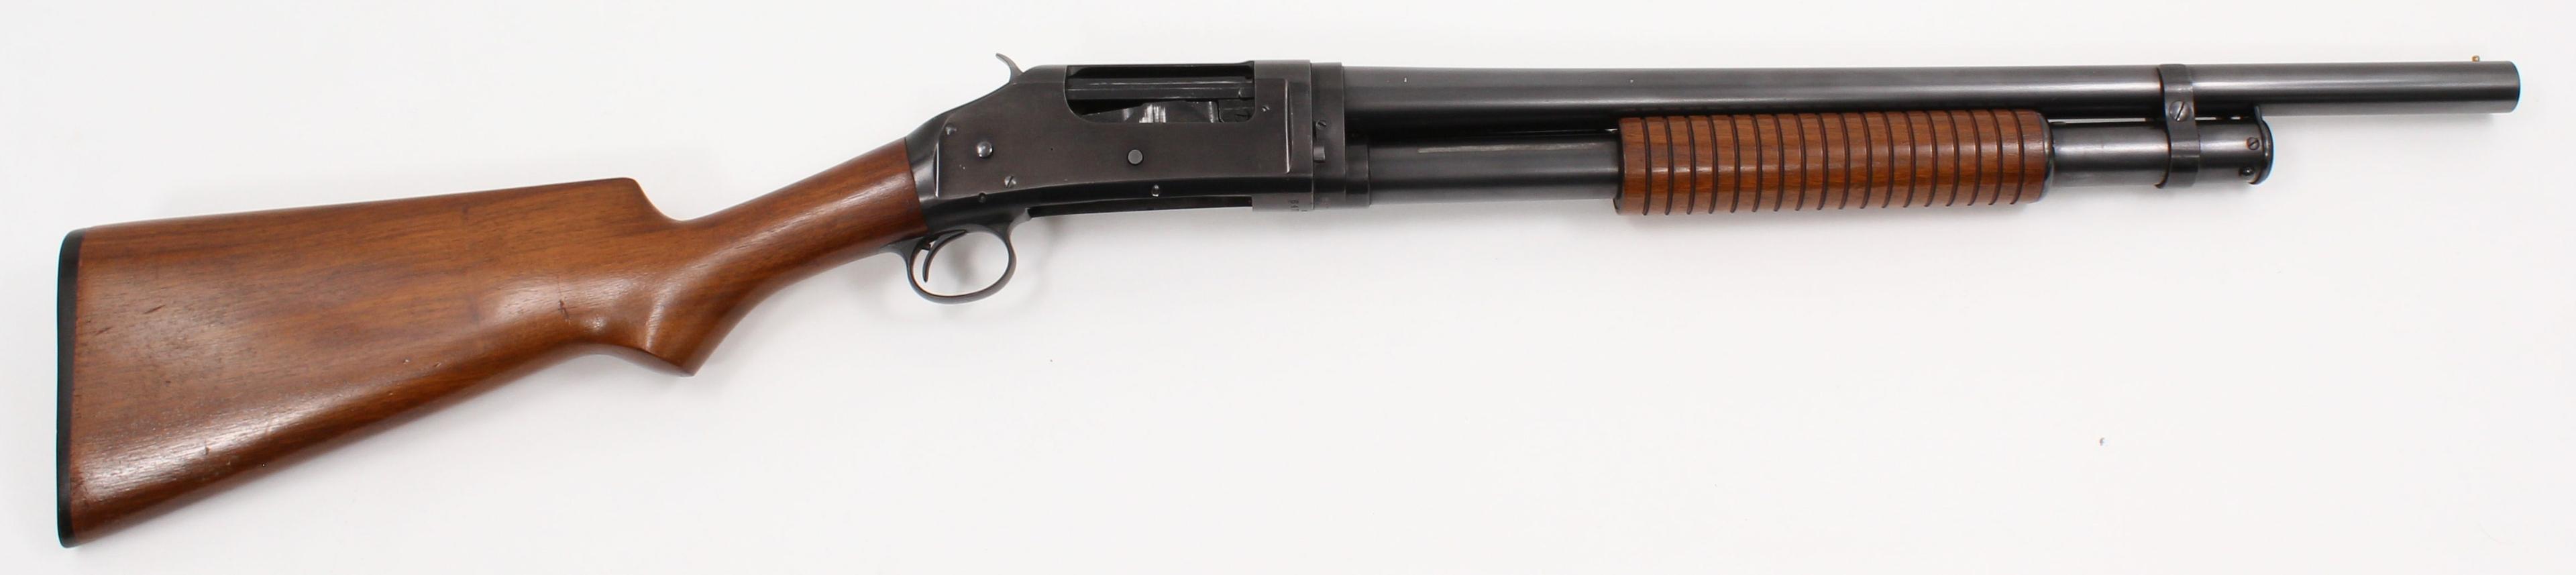 Winchester, Model 1897 riot gun, 12 ga,